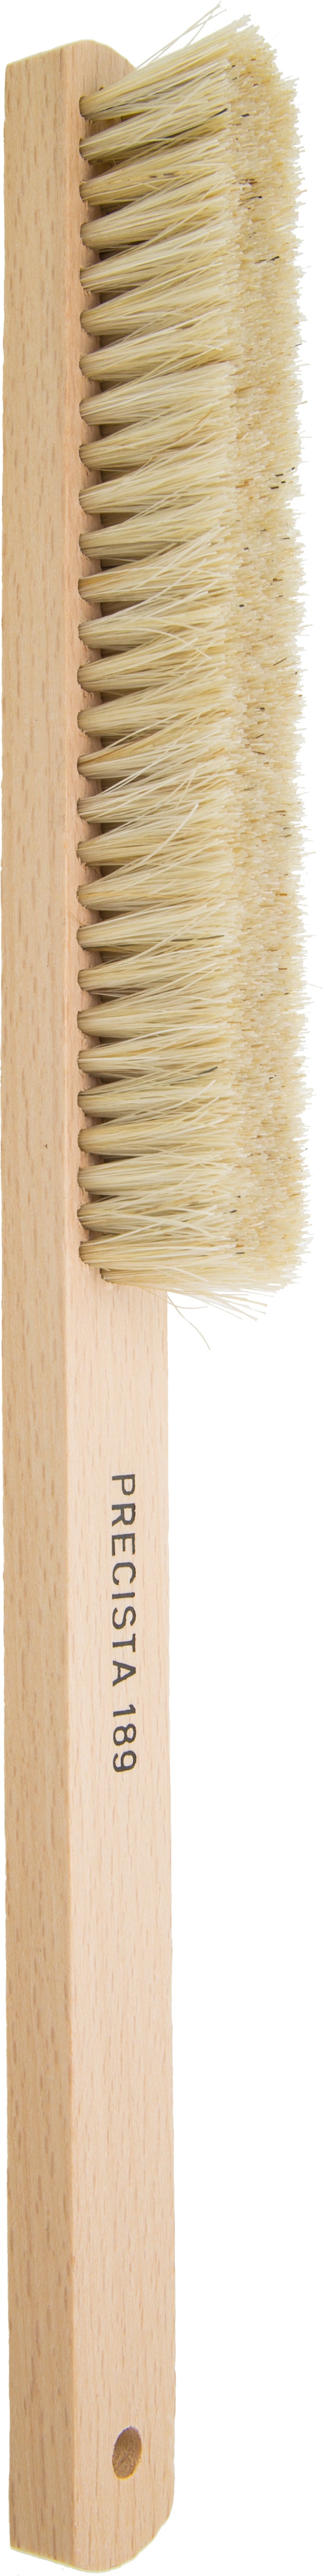 Excelta 189 Brushes - Bench - 4.5" X .5" - Horse Hair Bristles/Wooden Handle - Half Soft